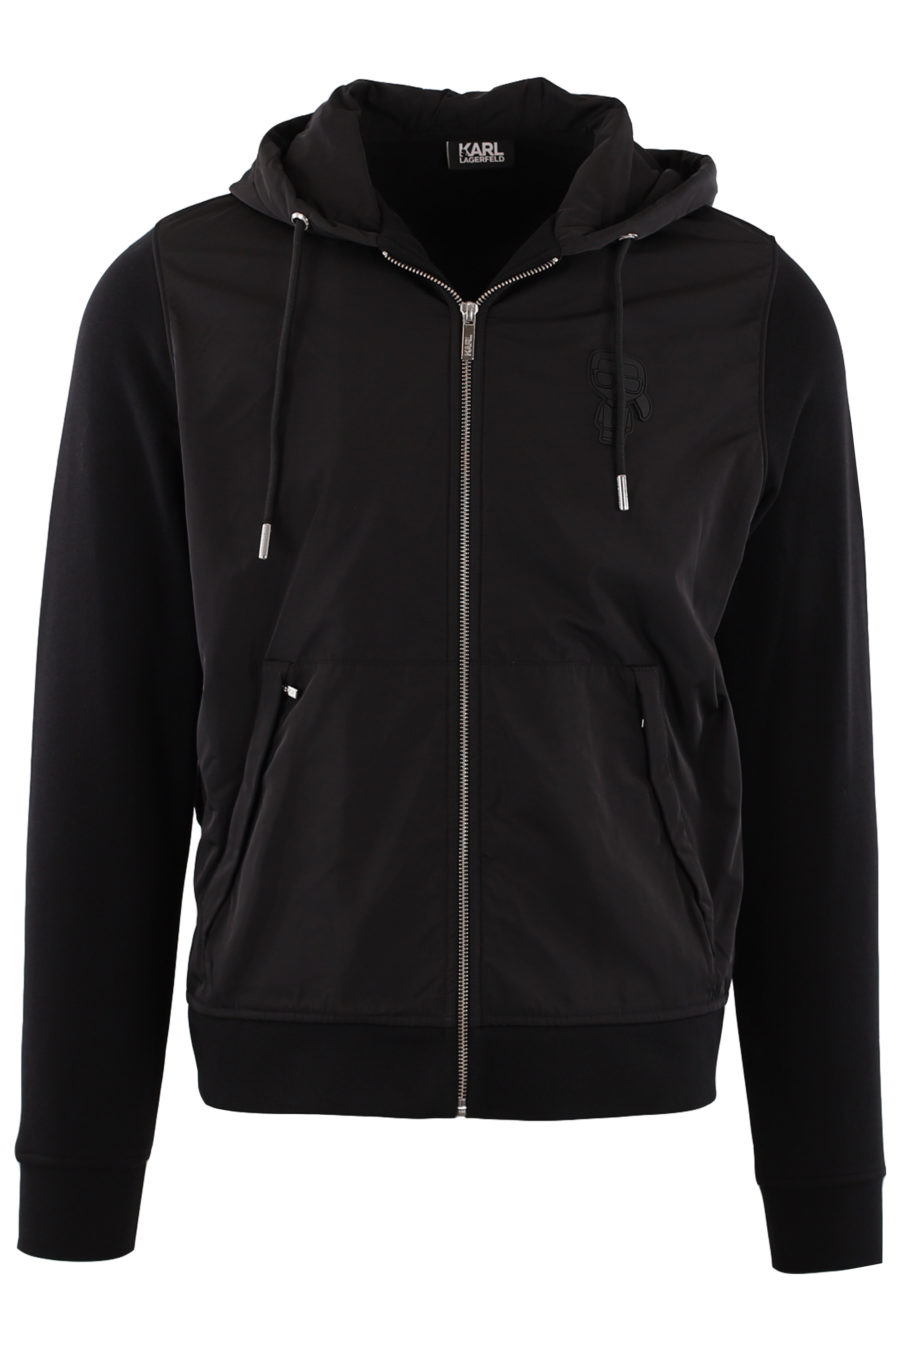 Black waterproof hooded jacket mix with rubberised "Karl" logo - IMG 9175